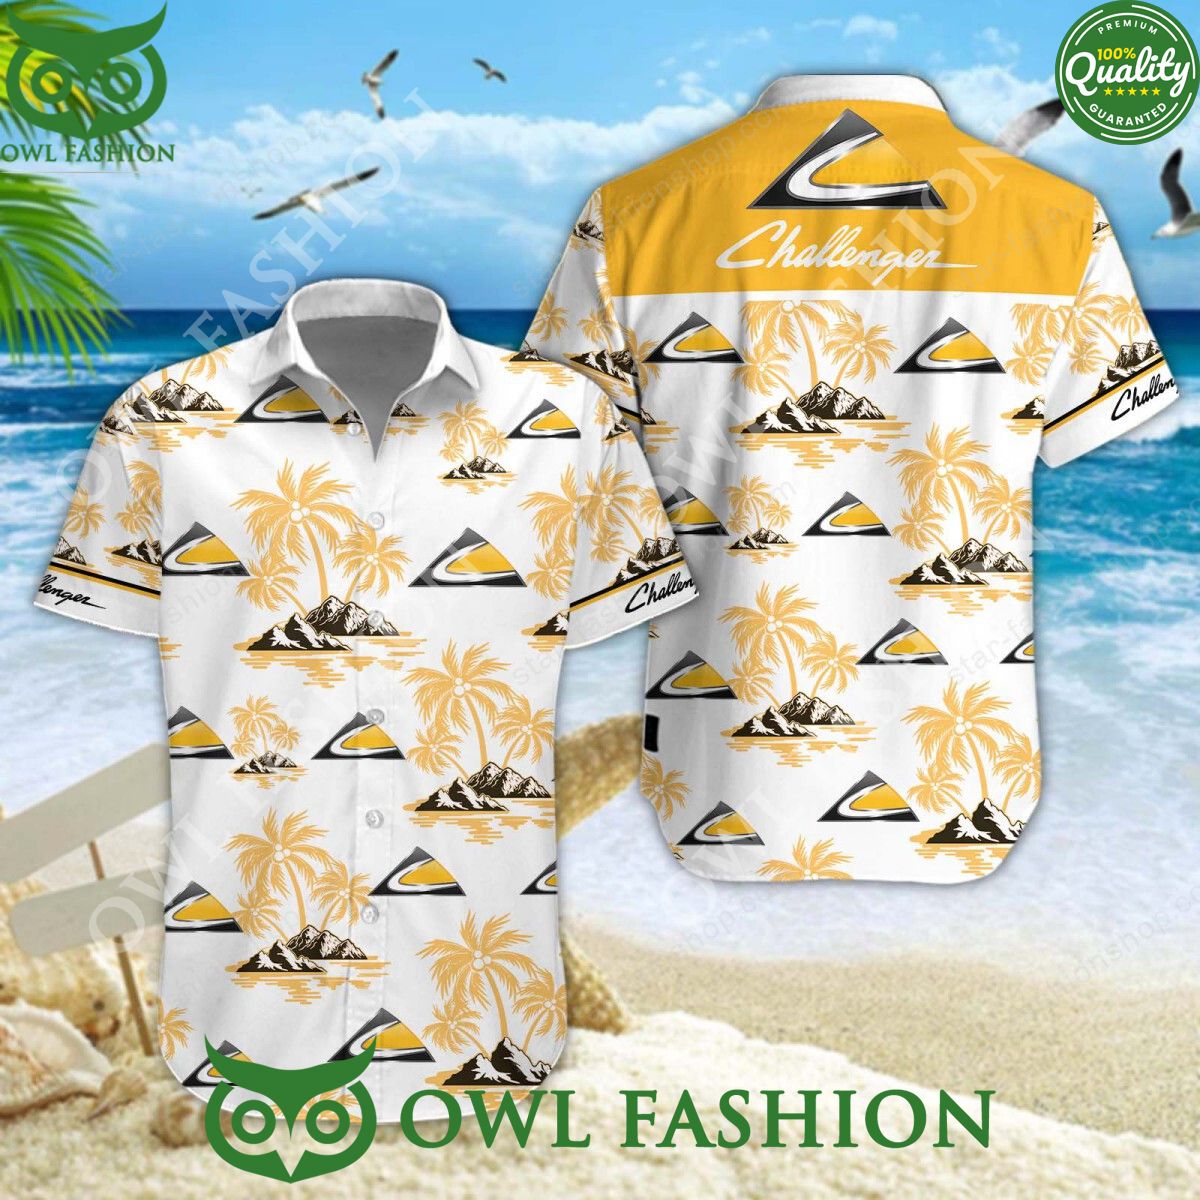 challenger american brand of agricultural tractors hawaiian shirt and short 1 PuRm6.jpg